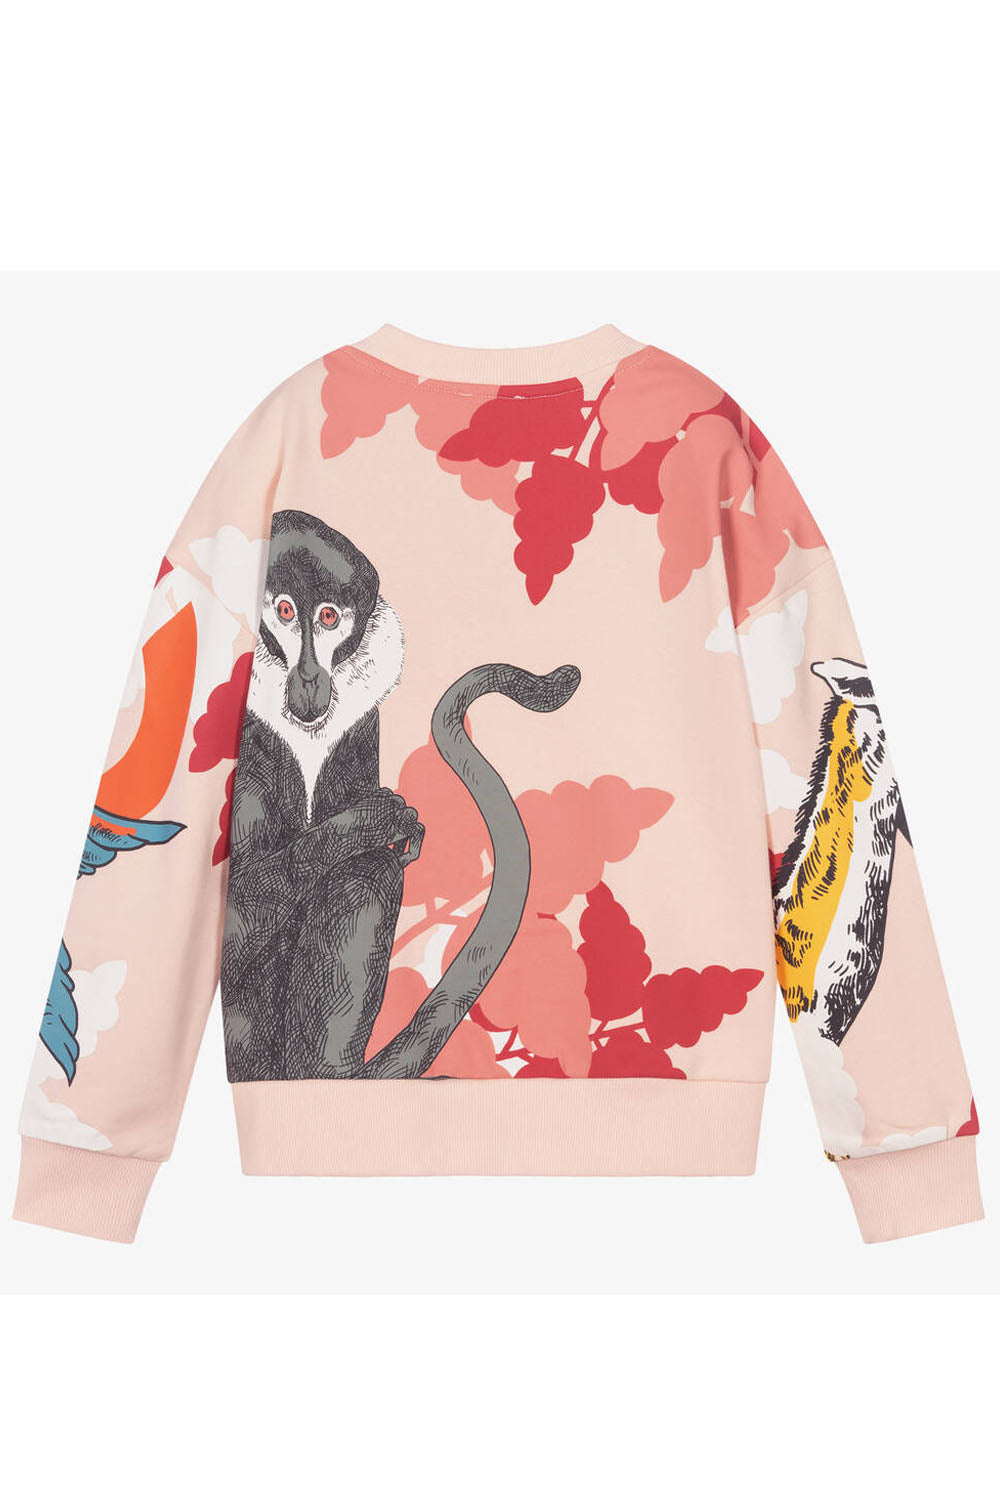 Jungle print Sweatshirt for Girls - Maison7